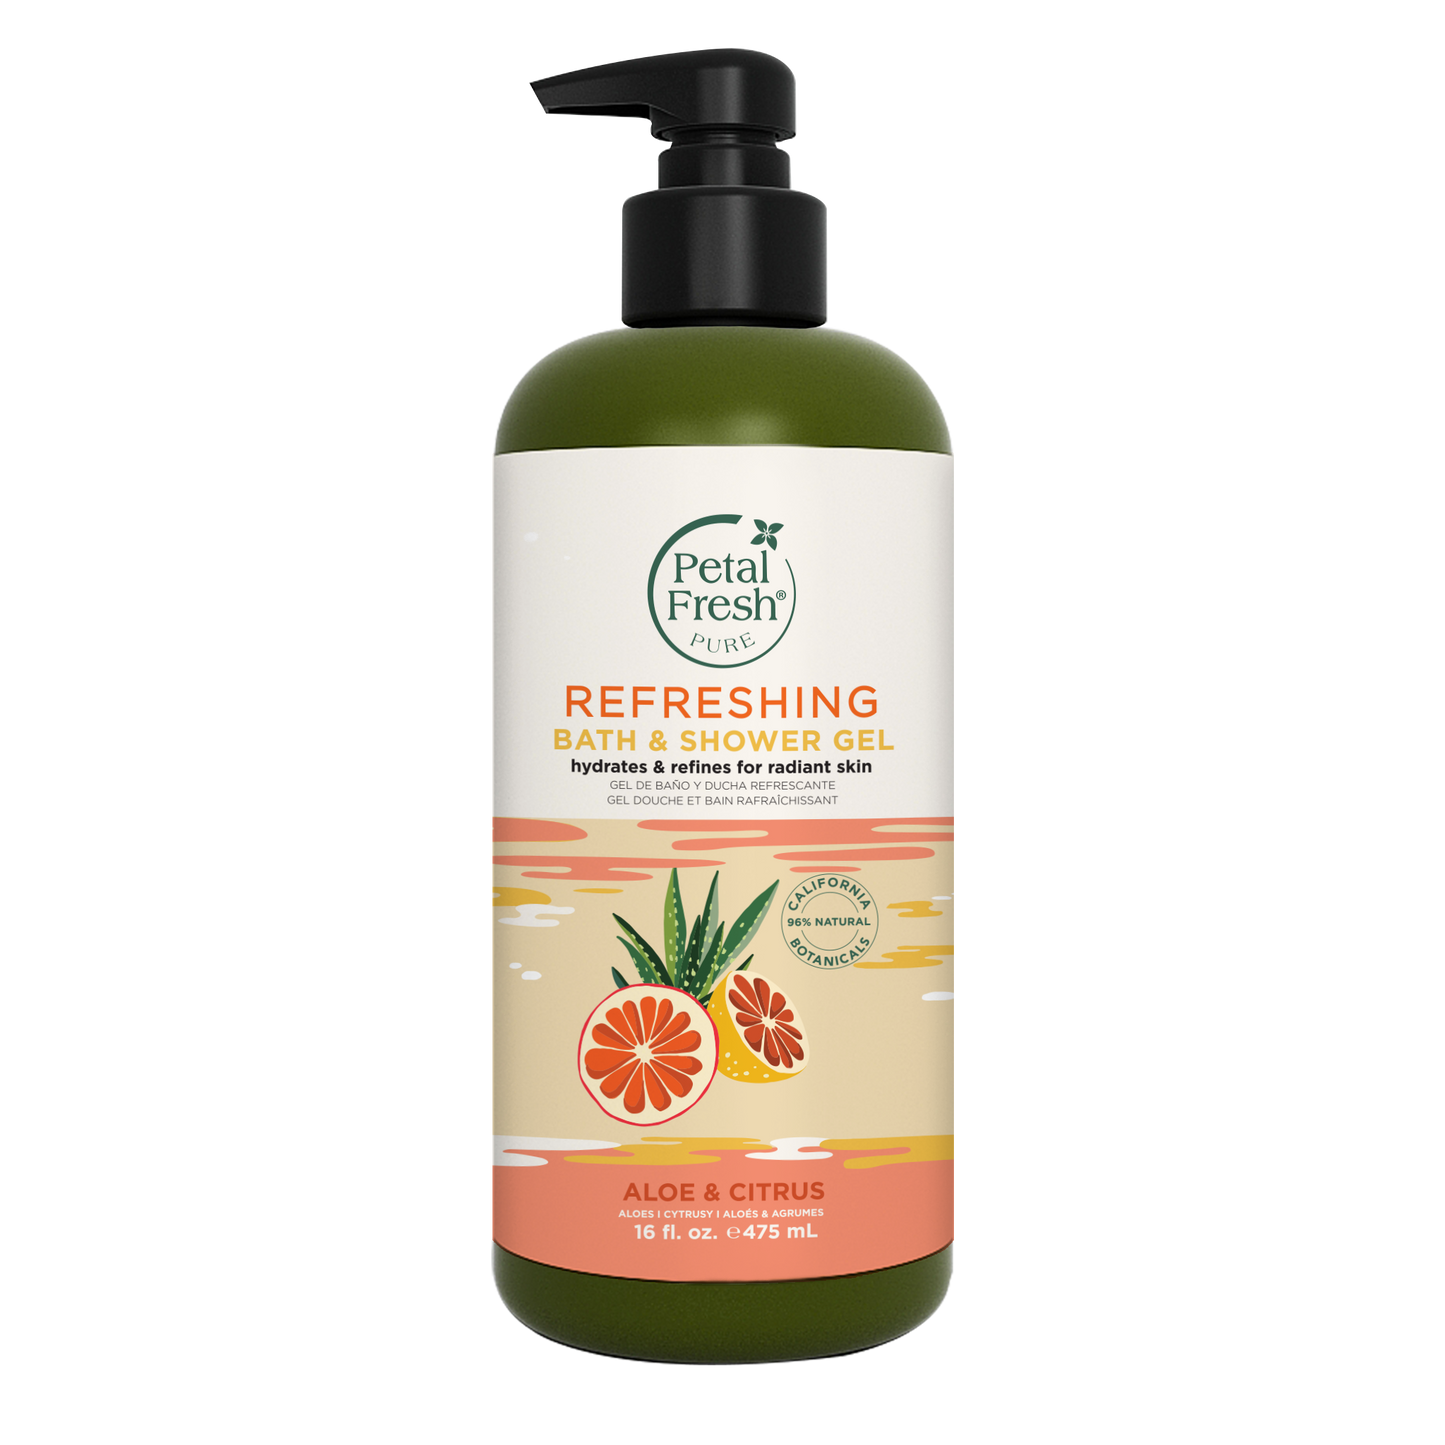 Refreshing Bath & Shower Gel with Aloe & Citrus